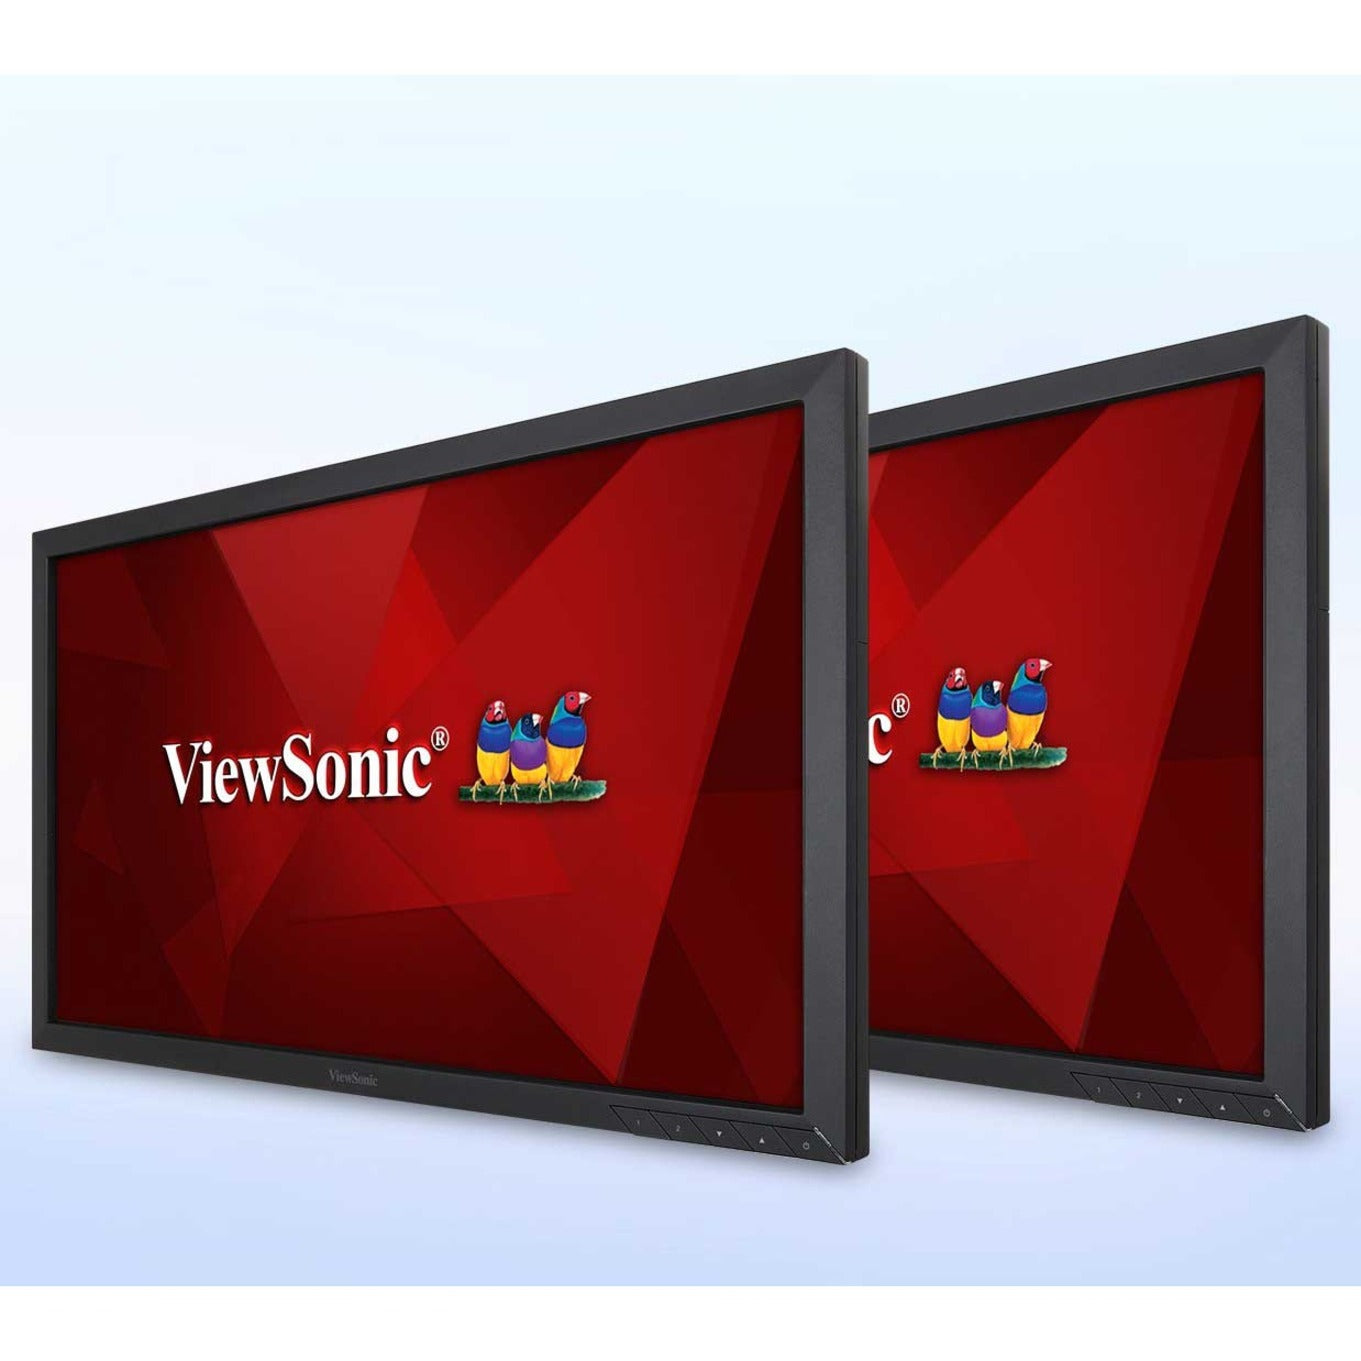 ViewSonic VA2252SM_H2 Value Dual Head LCD Monitor, Full HD, 22", 3000:1 Contrast Ratio